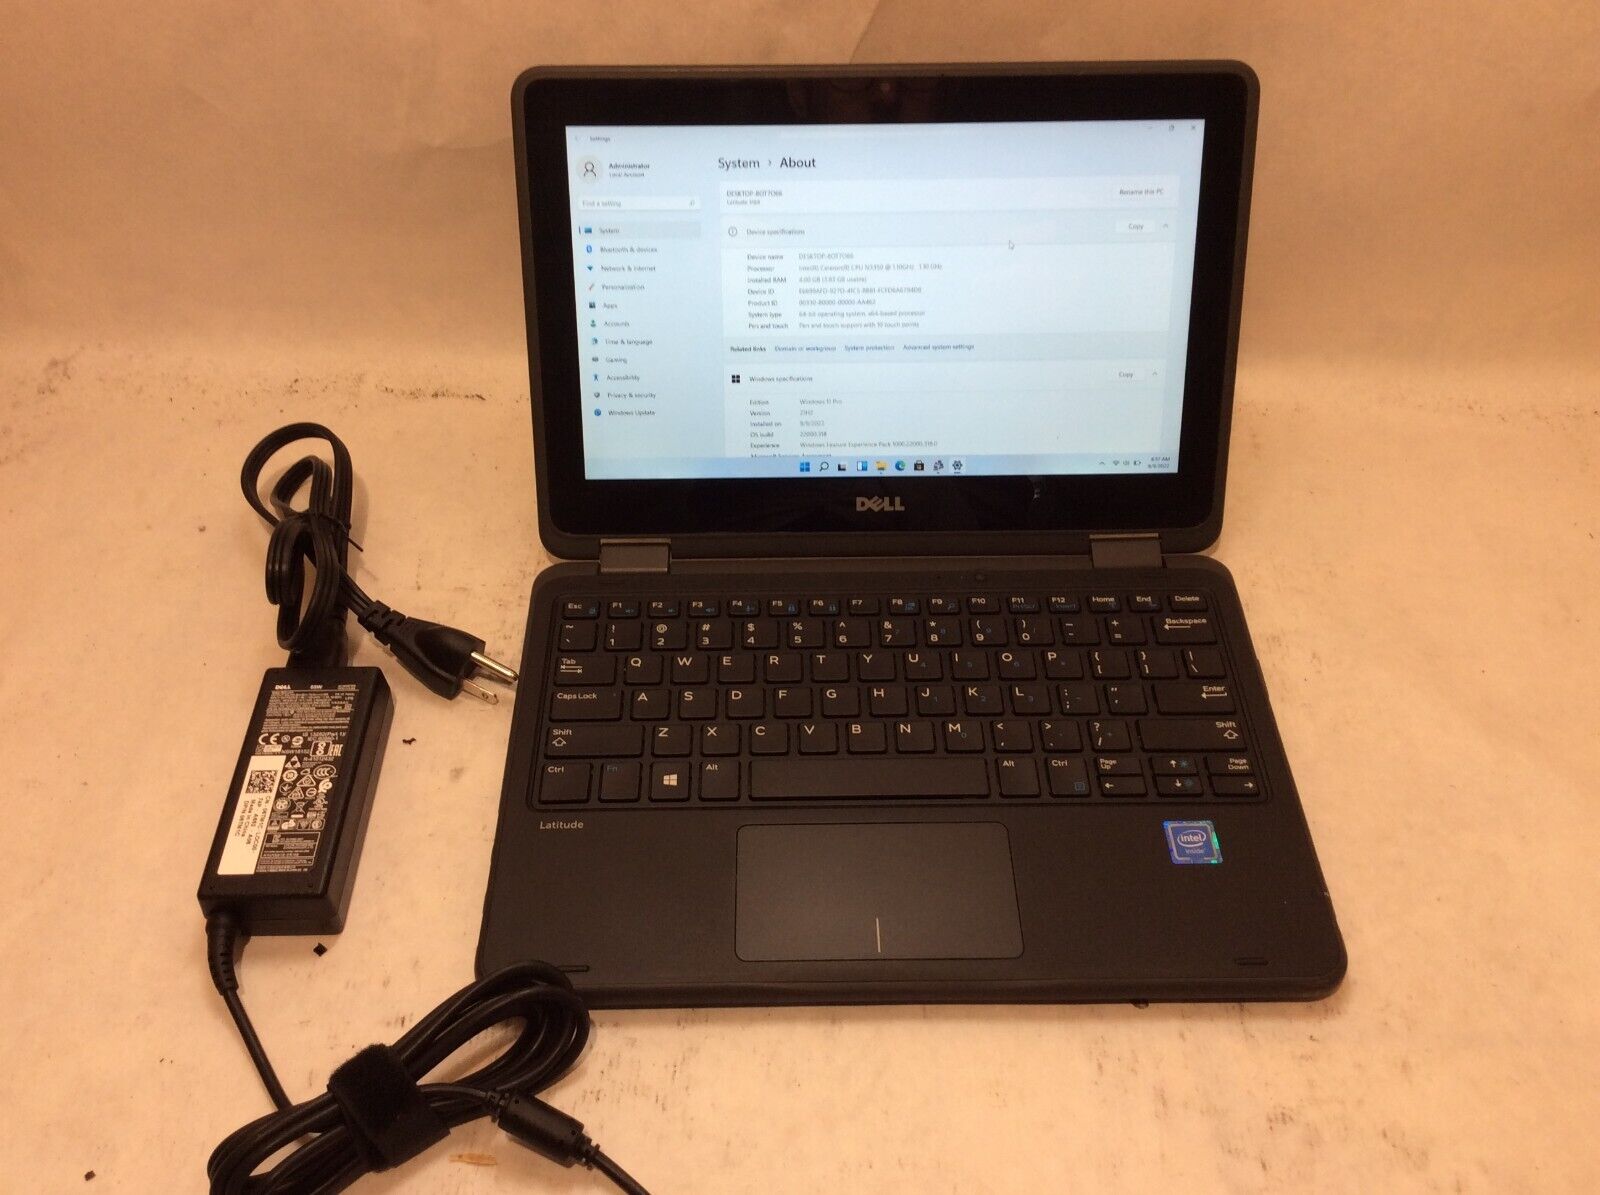 Dell Latitude 3190 Windows 10 Laptop 2-in-1 tablet - 64GB SSD - 4GB - READY  884116299172 | eBay